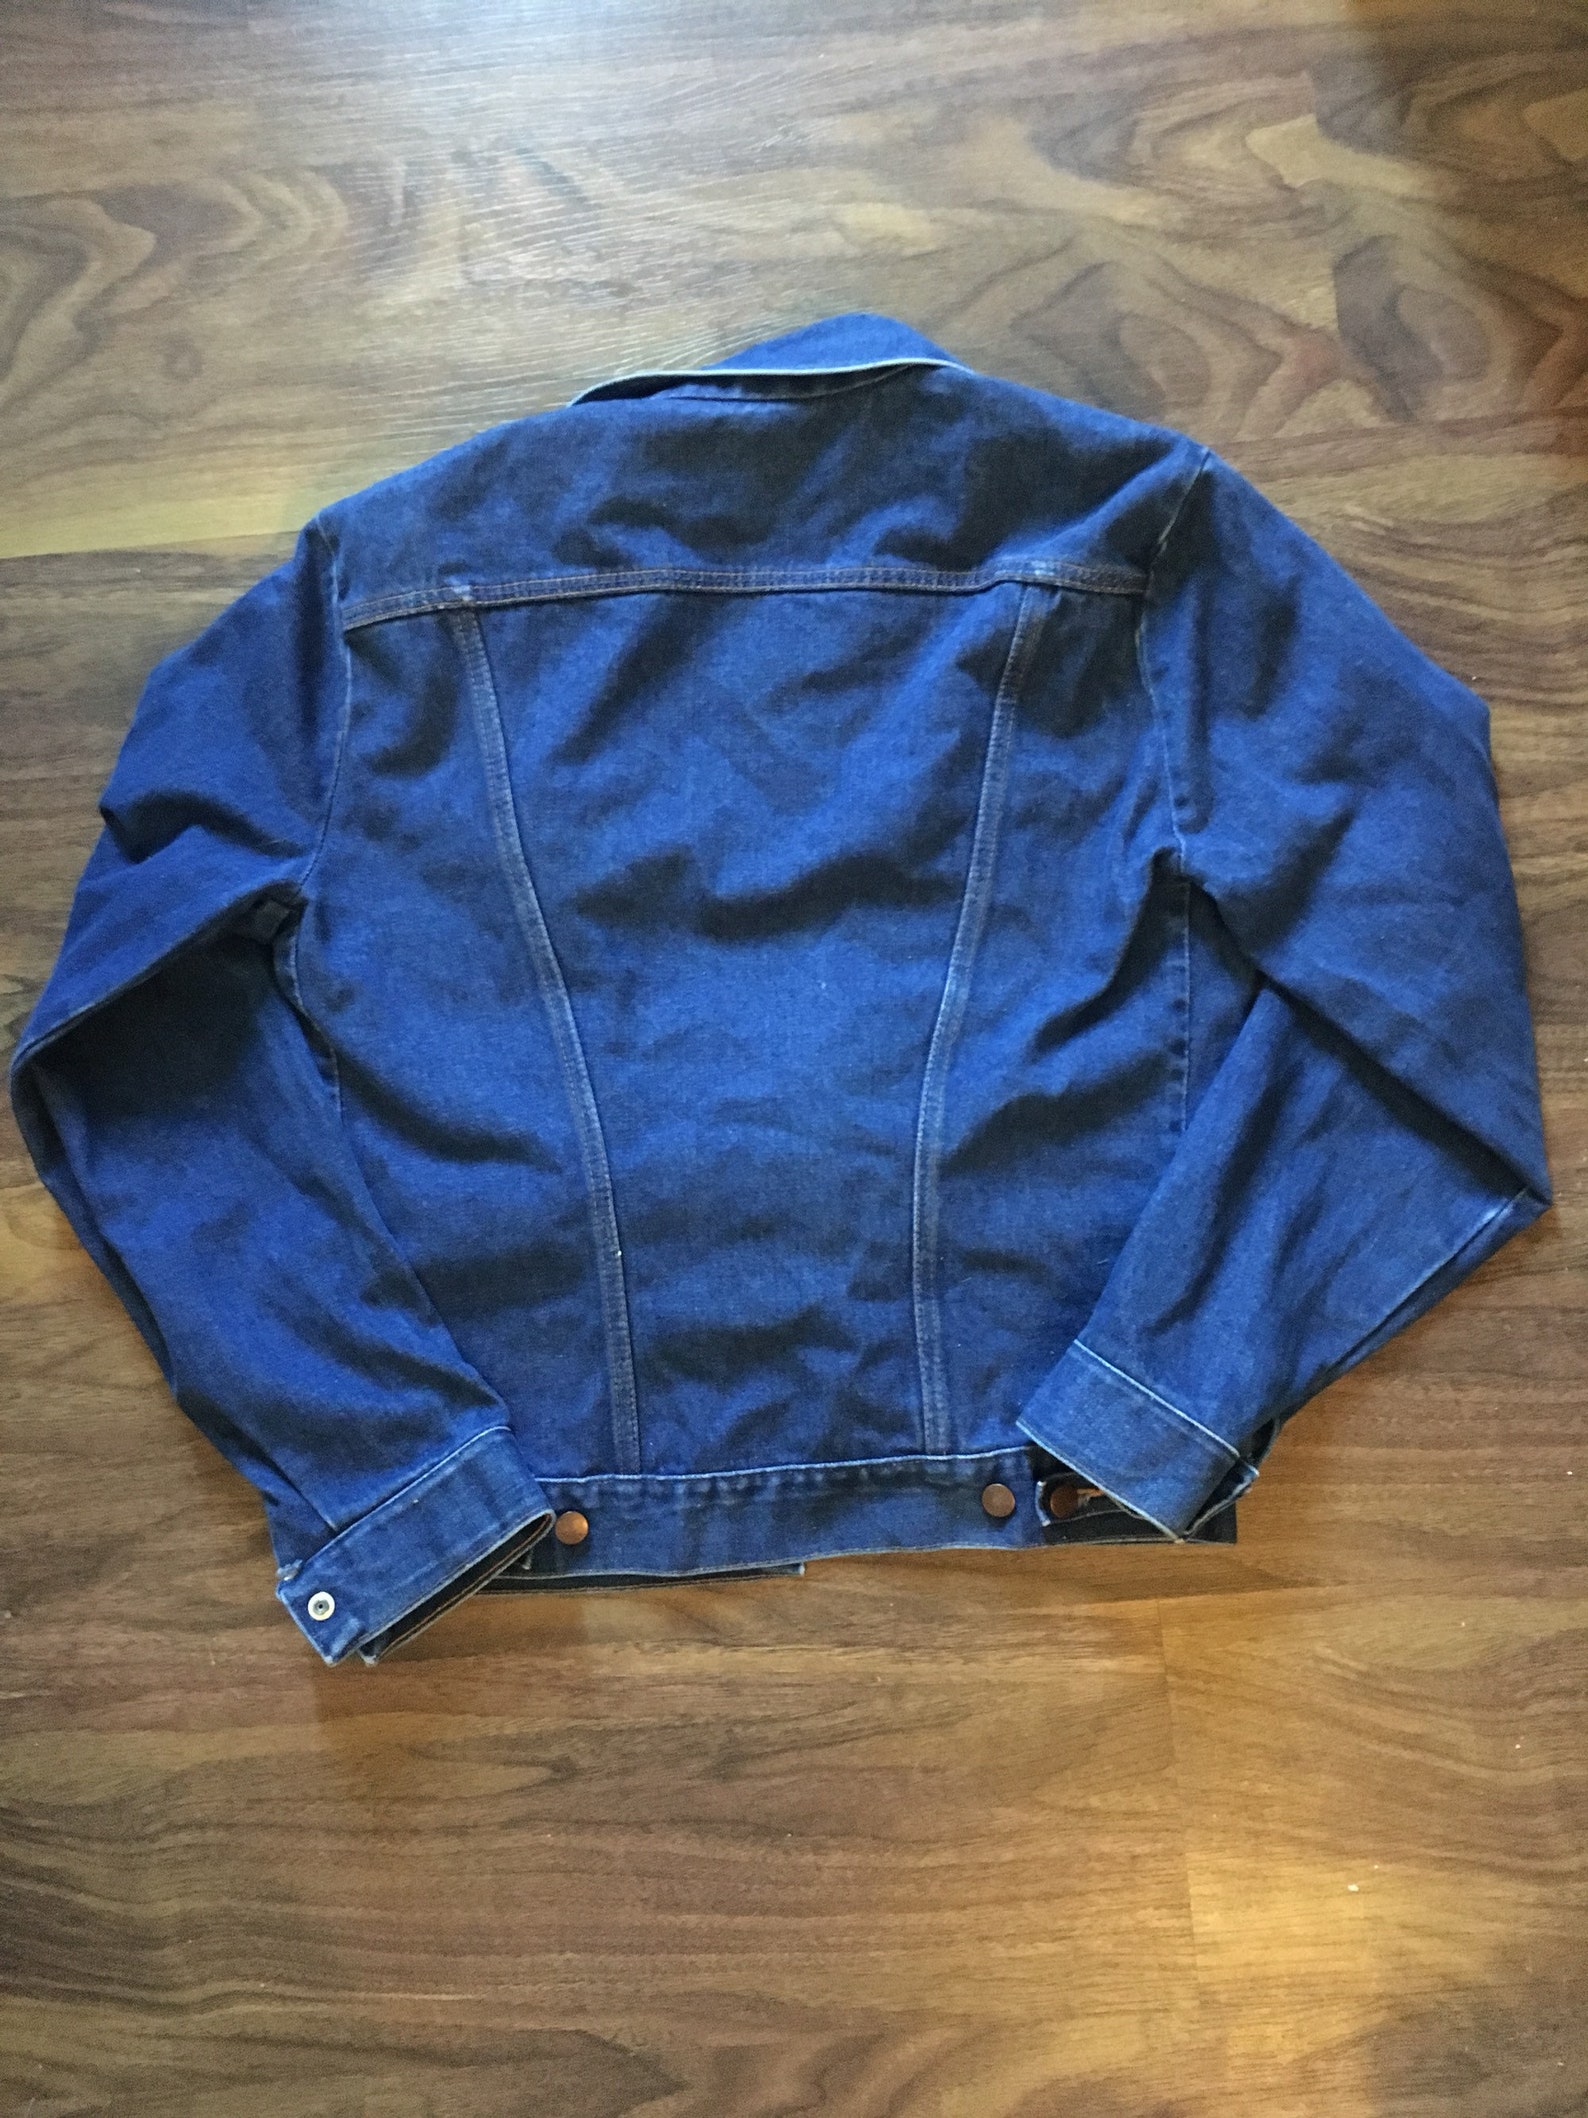 Wrangler No Fault Denim Jacket 1970s Vintage Jean Jacket - Etsy New Zealand